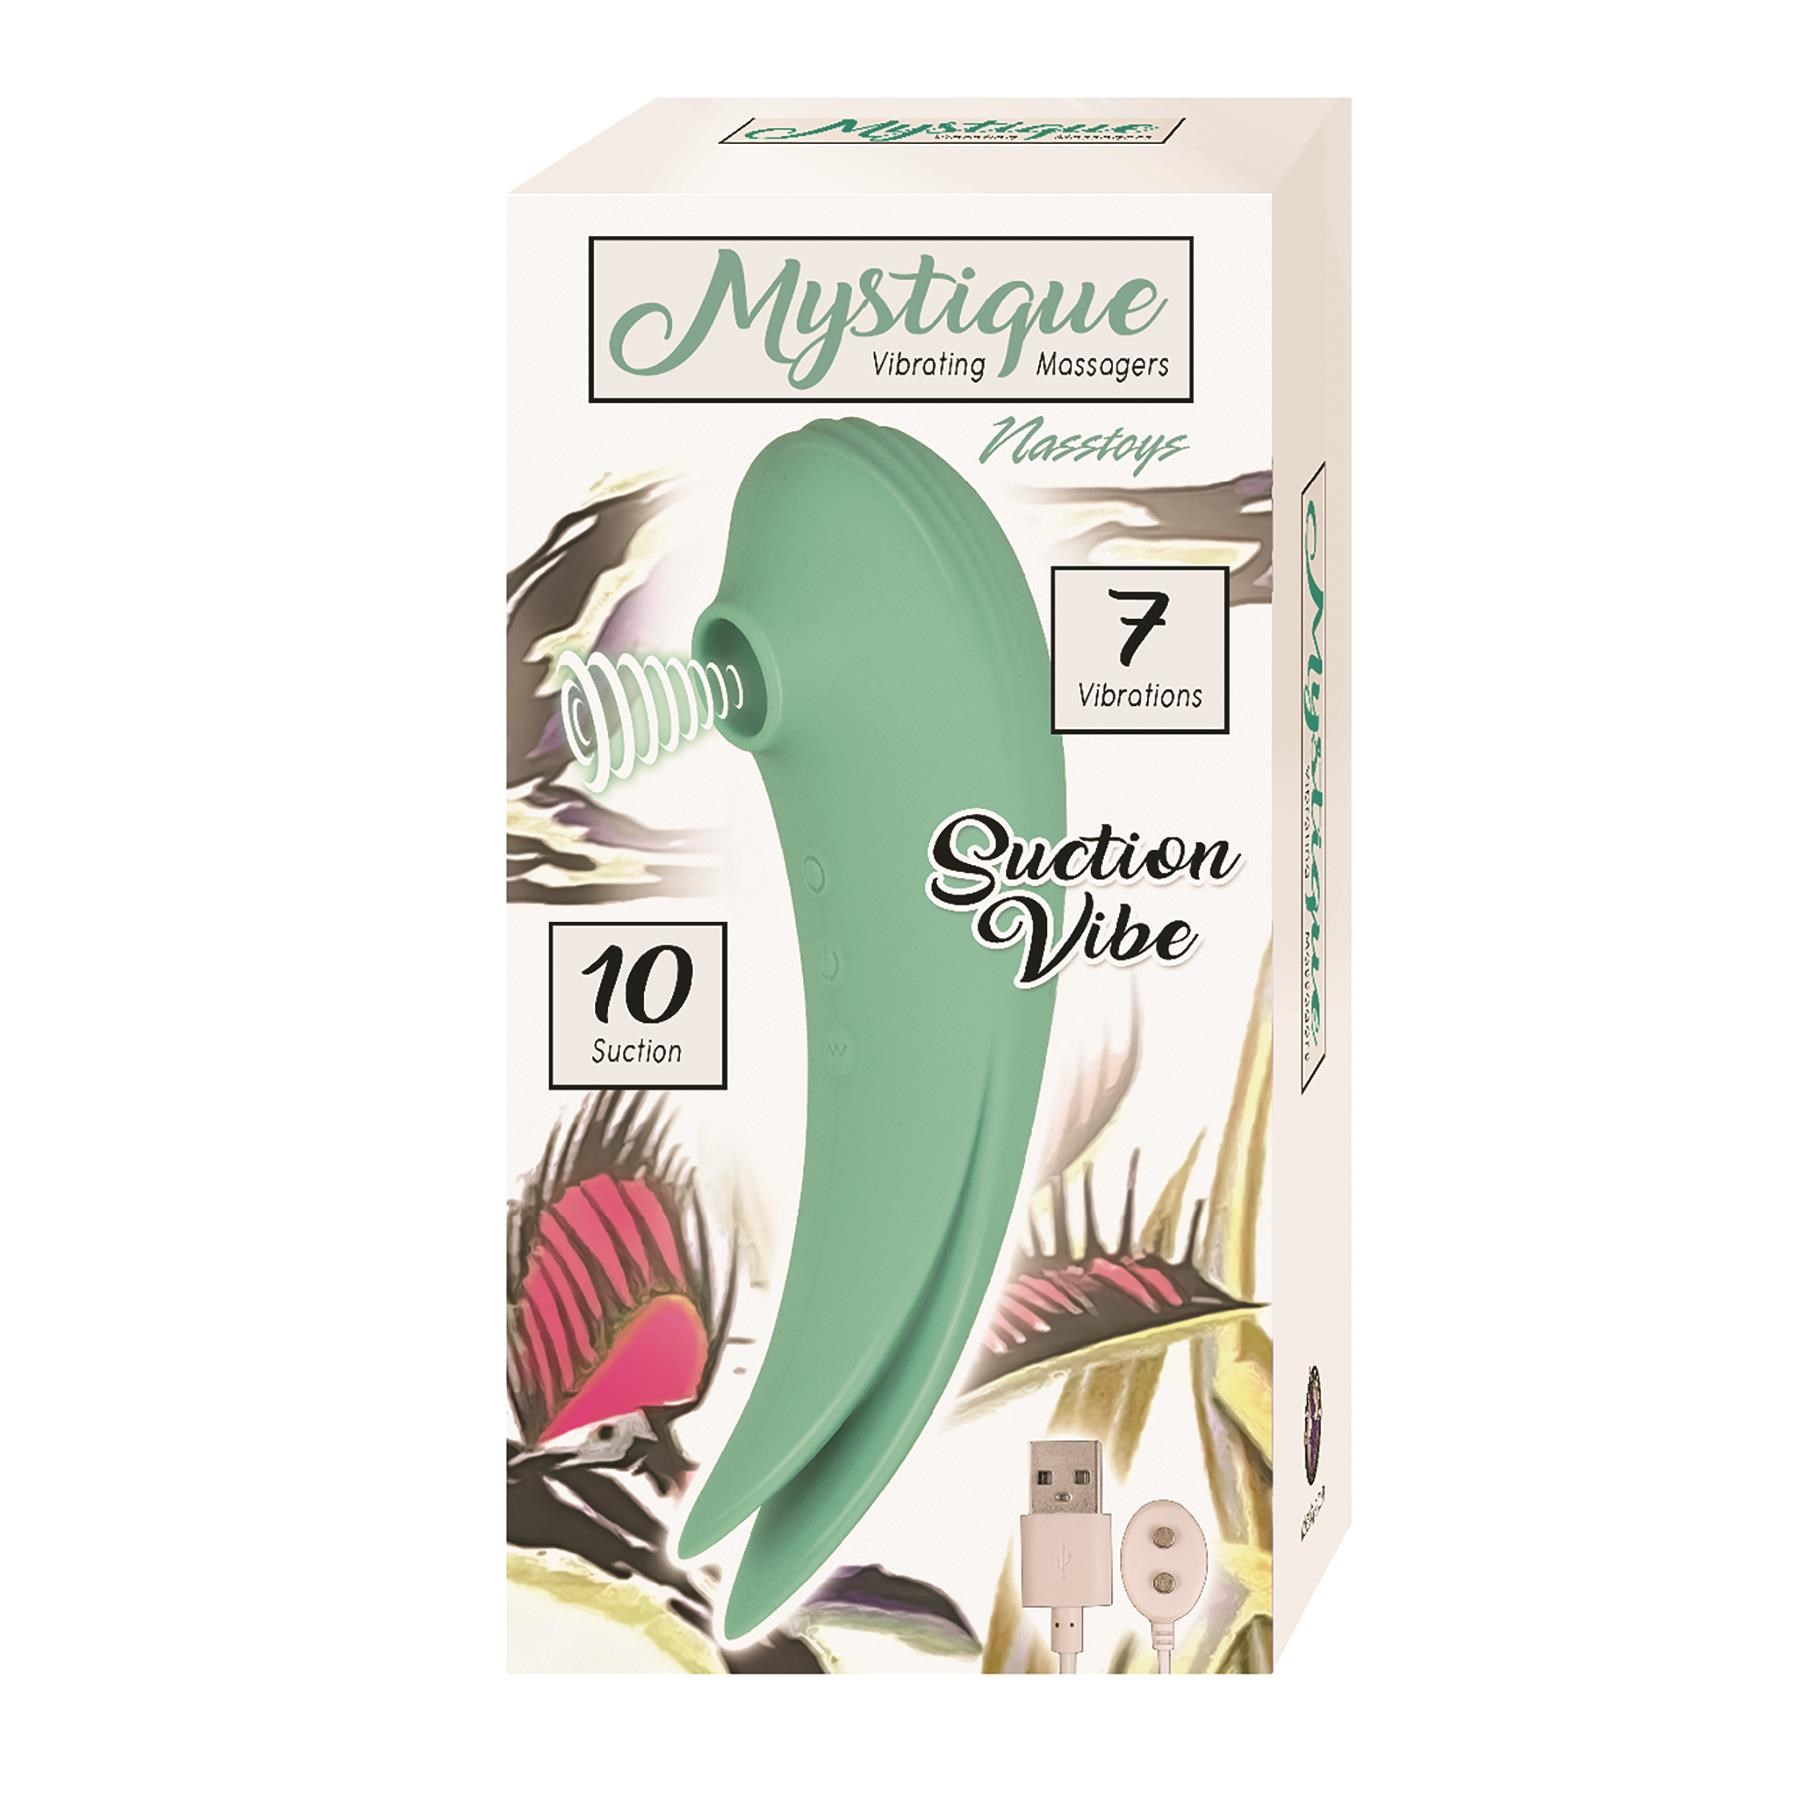 Mystique Suction Vibrator - Packaging